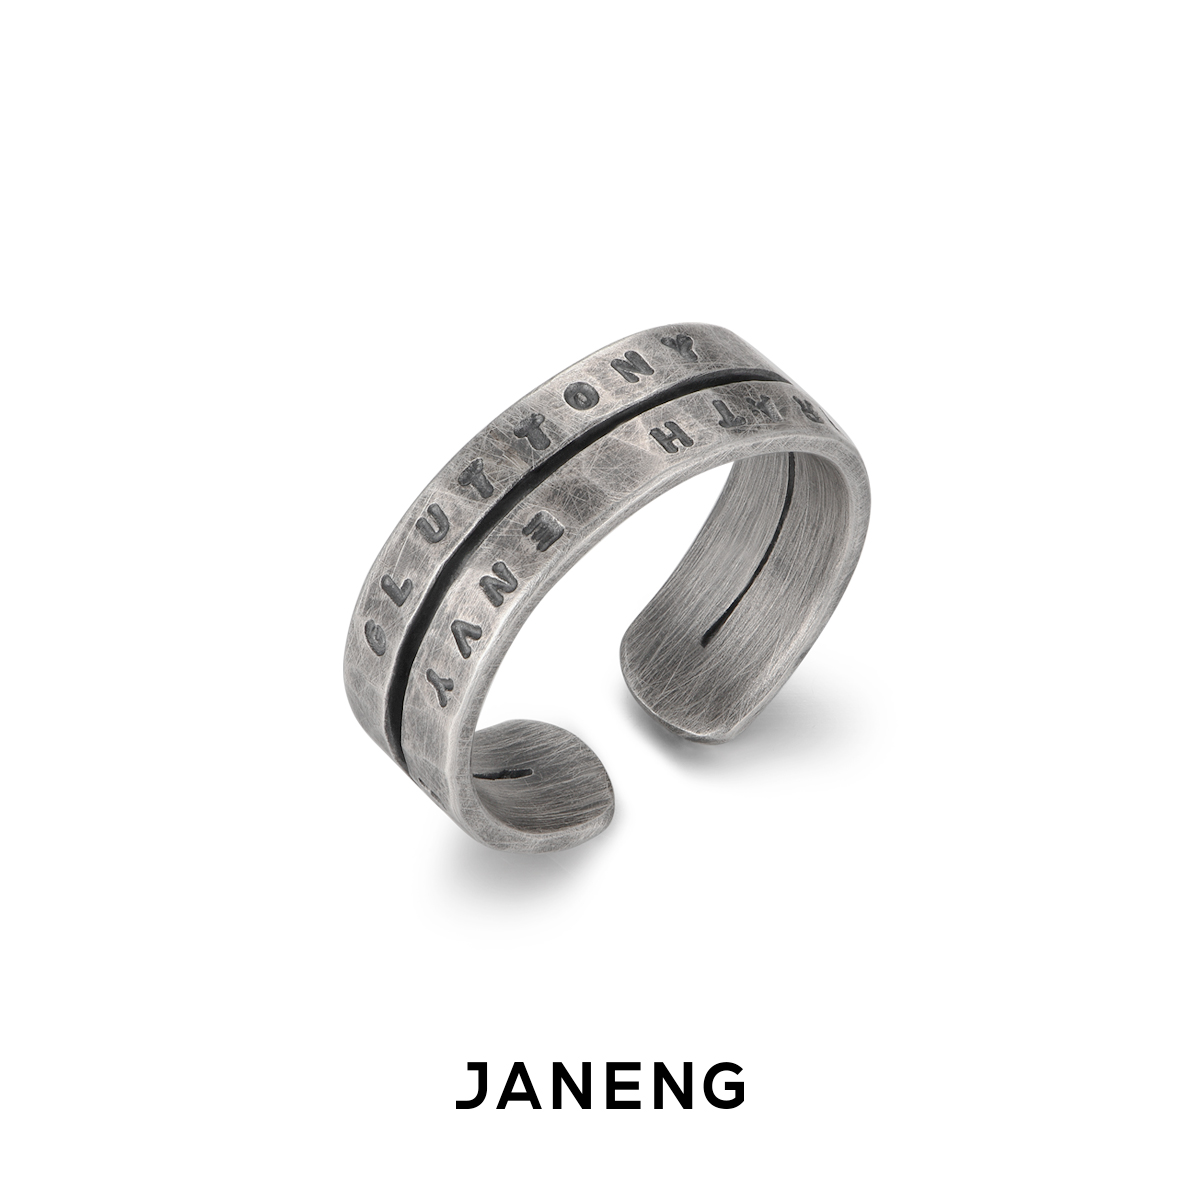 JANENG追岸 925纯银复古文字开口可调节戒指 男女款中性风格指环